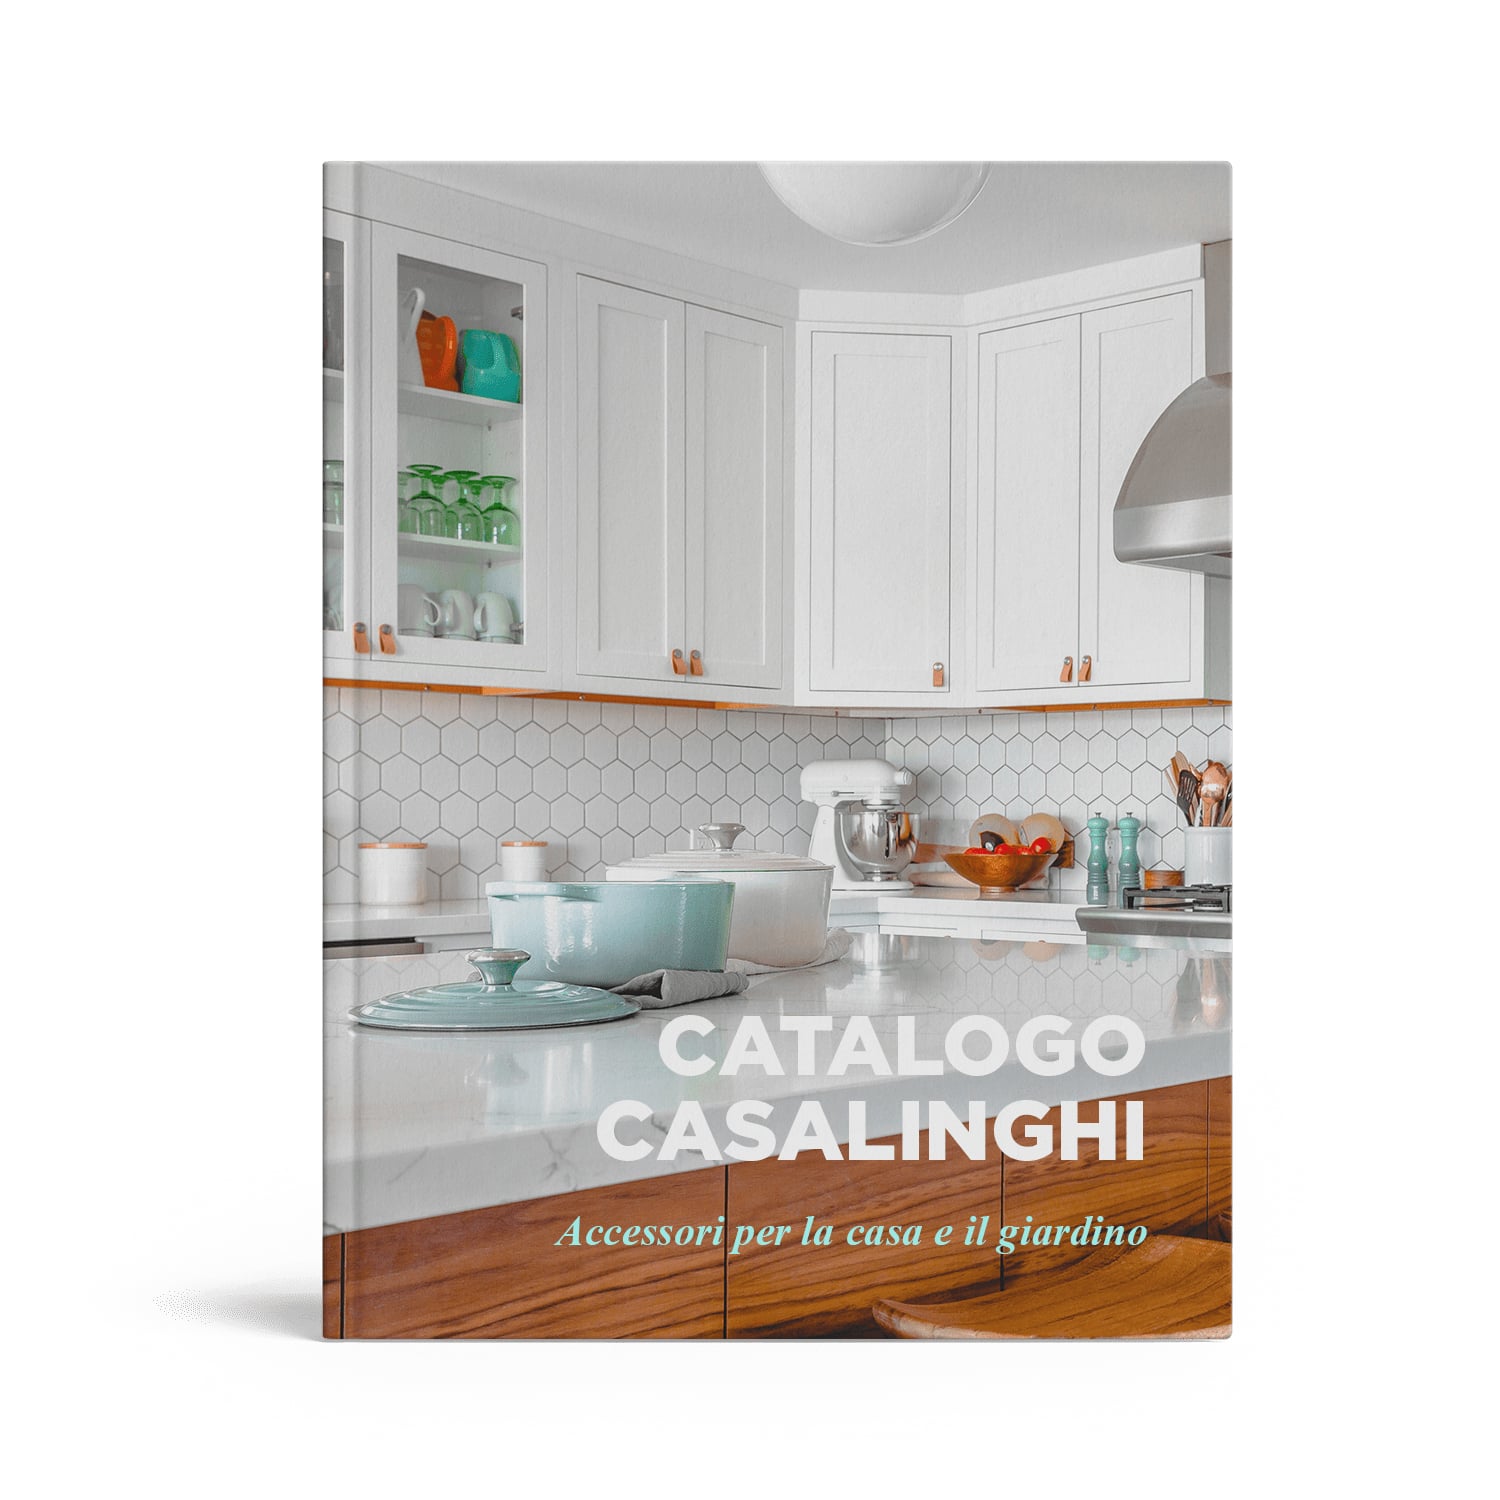 Catalogo Casalinghi - Batik srl